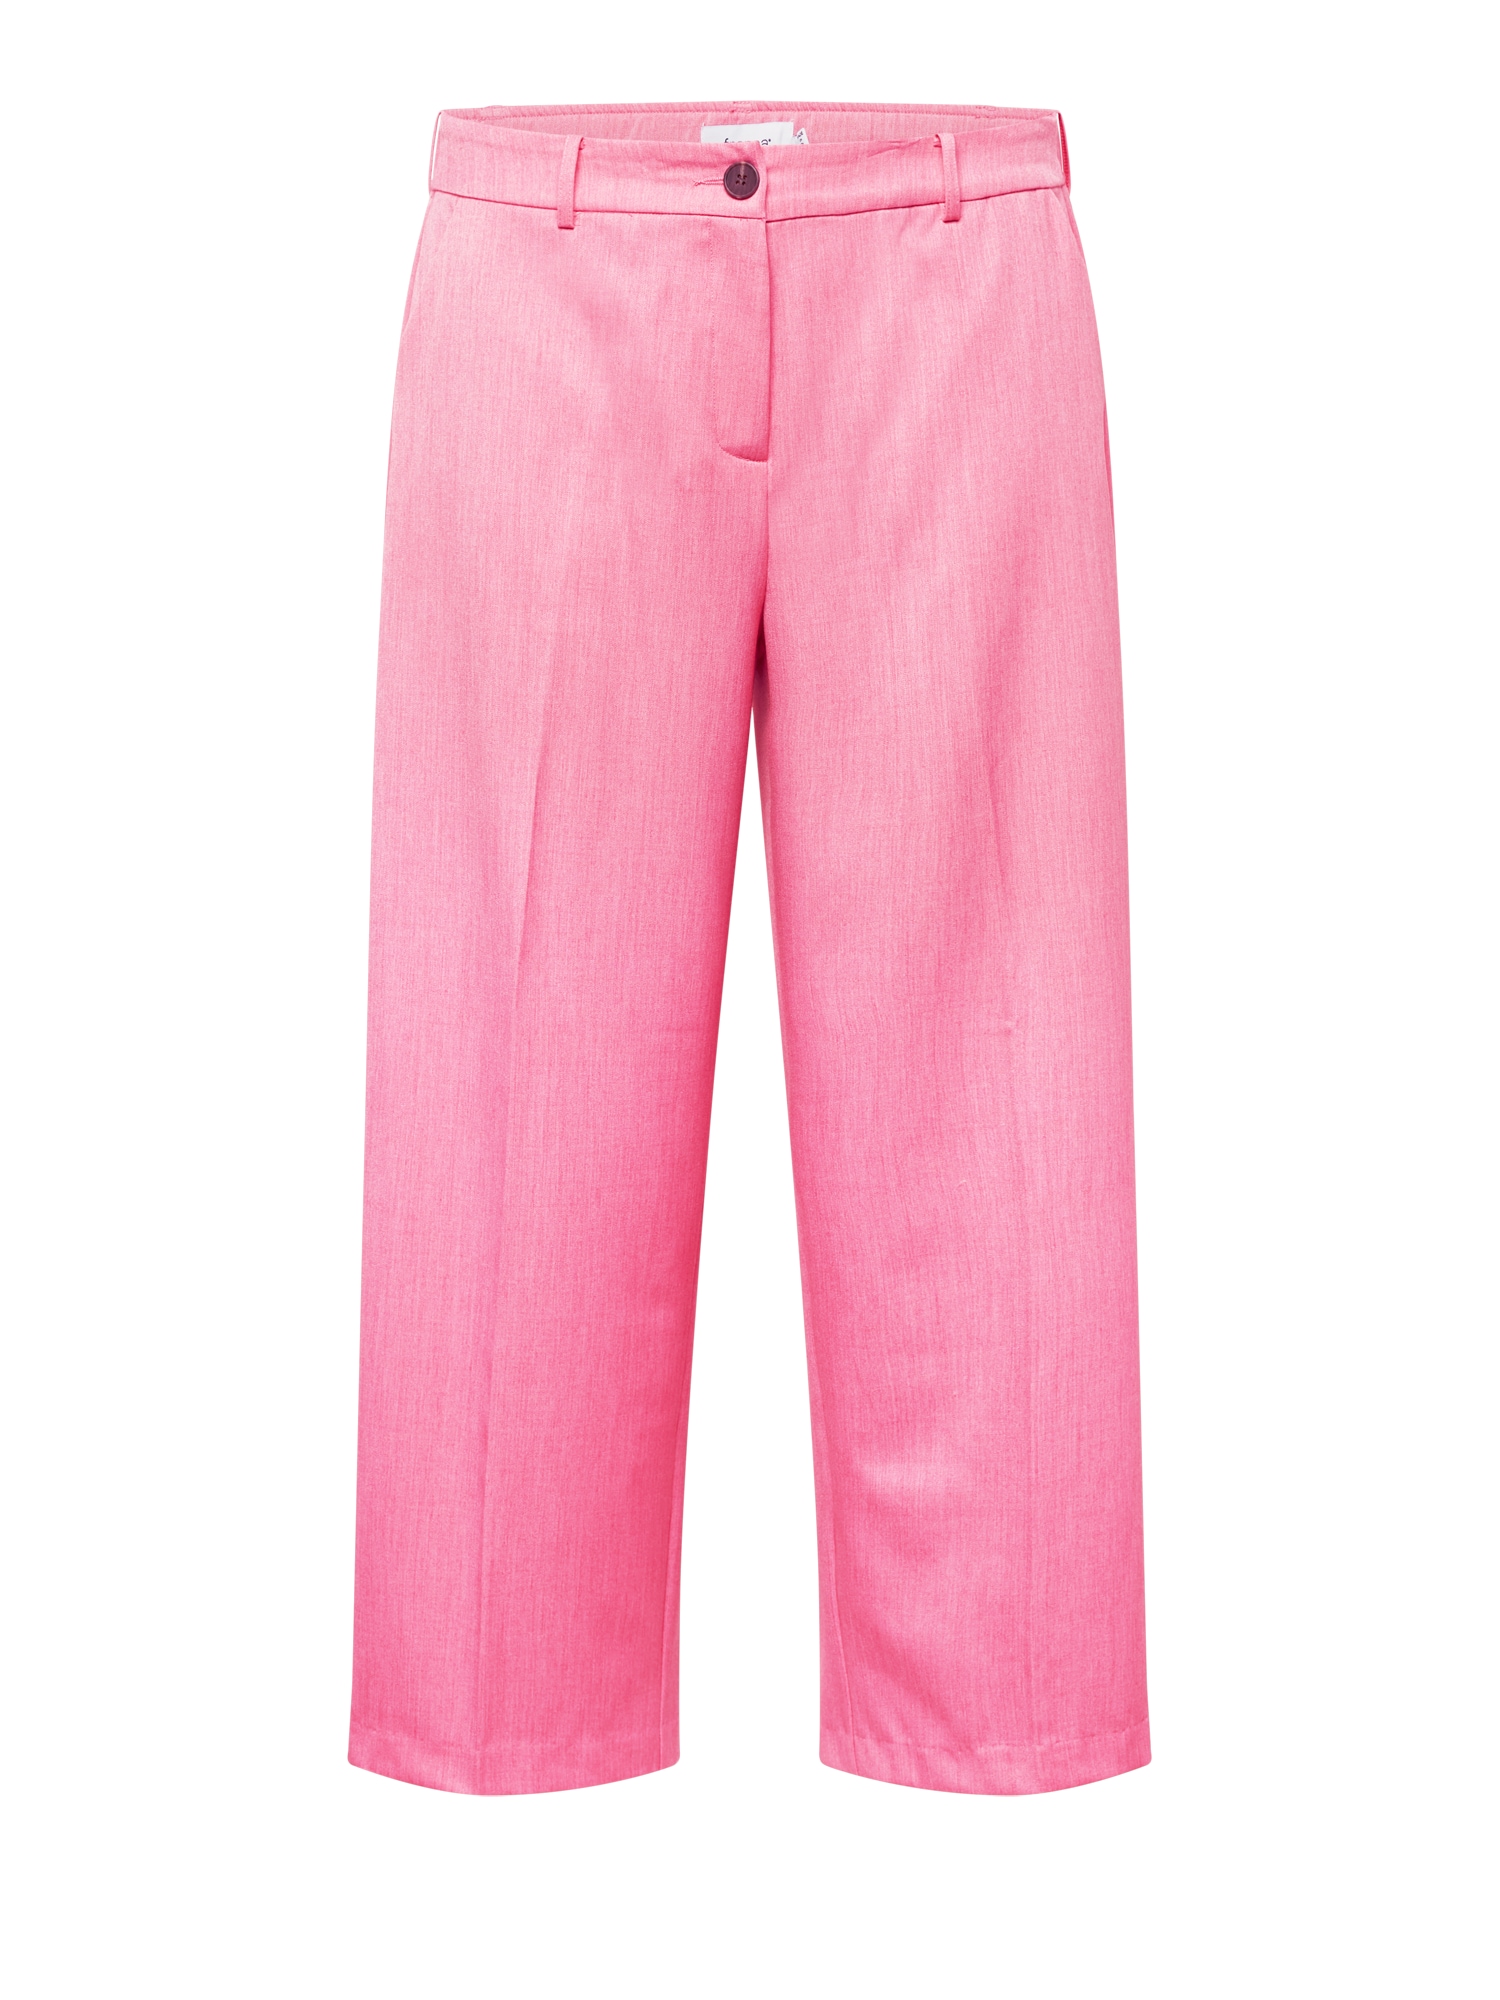 Nohavice s pukmi MILENA s ružovými fľakmi Fransa Curve